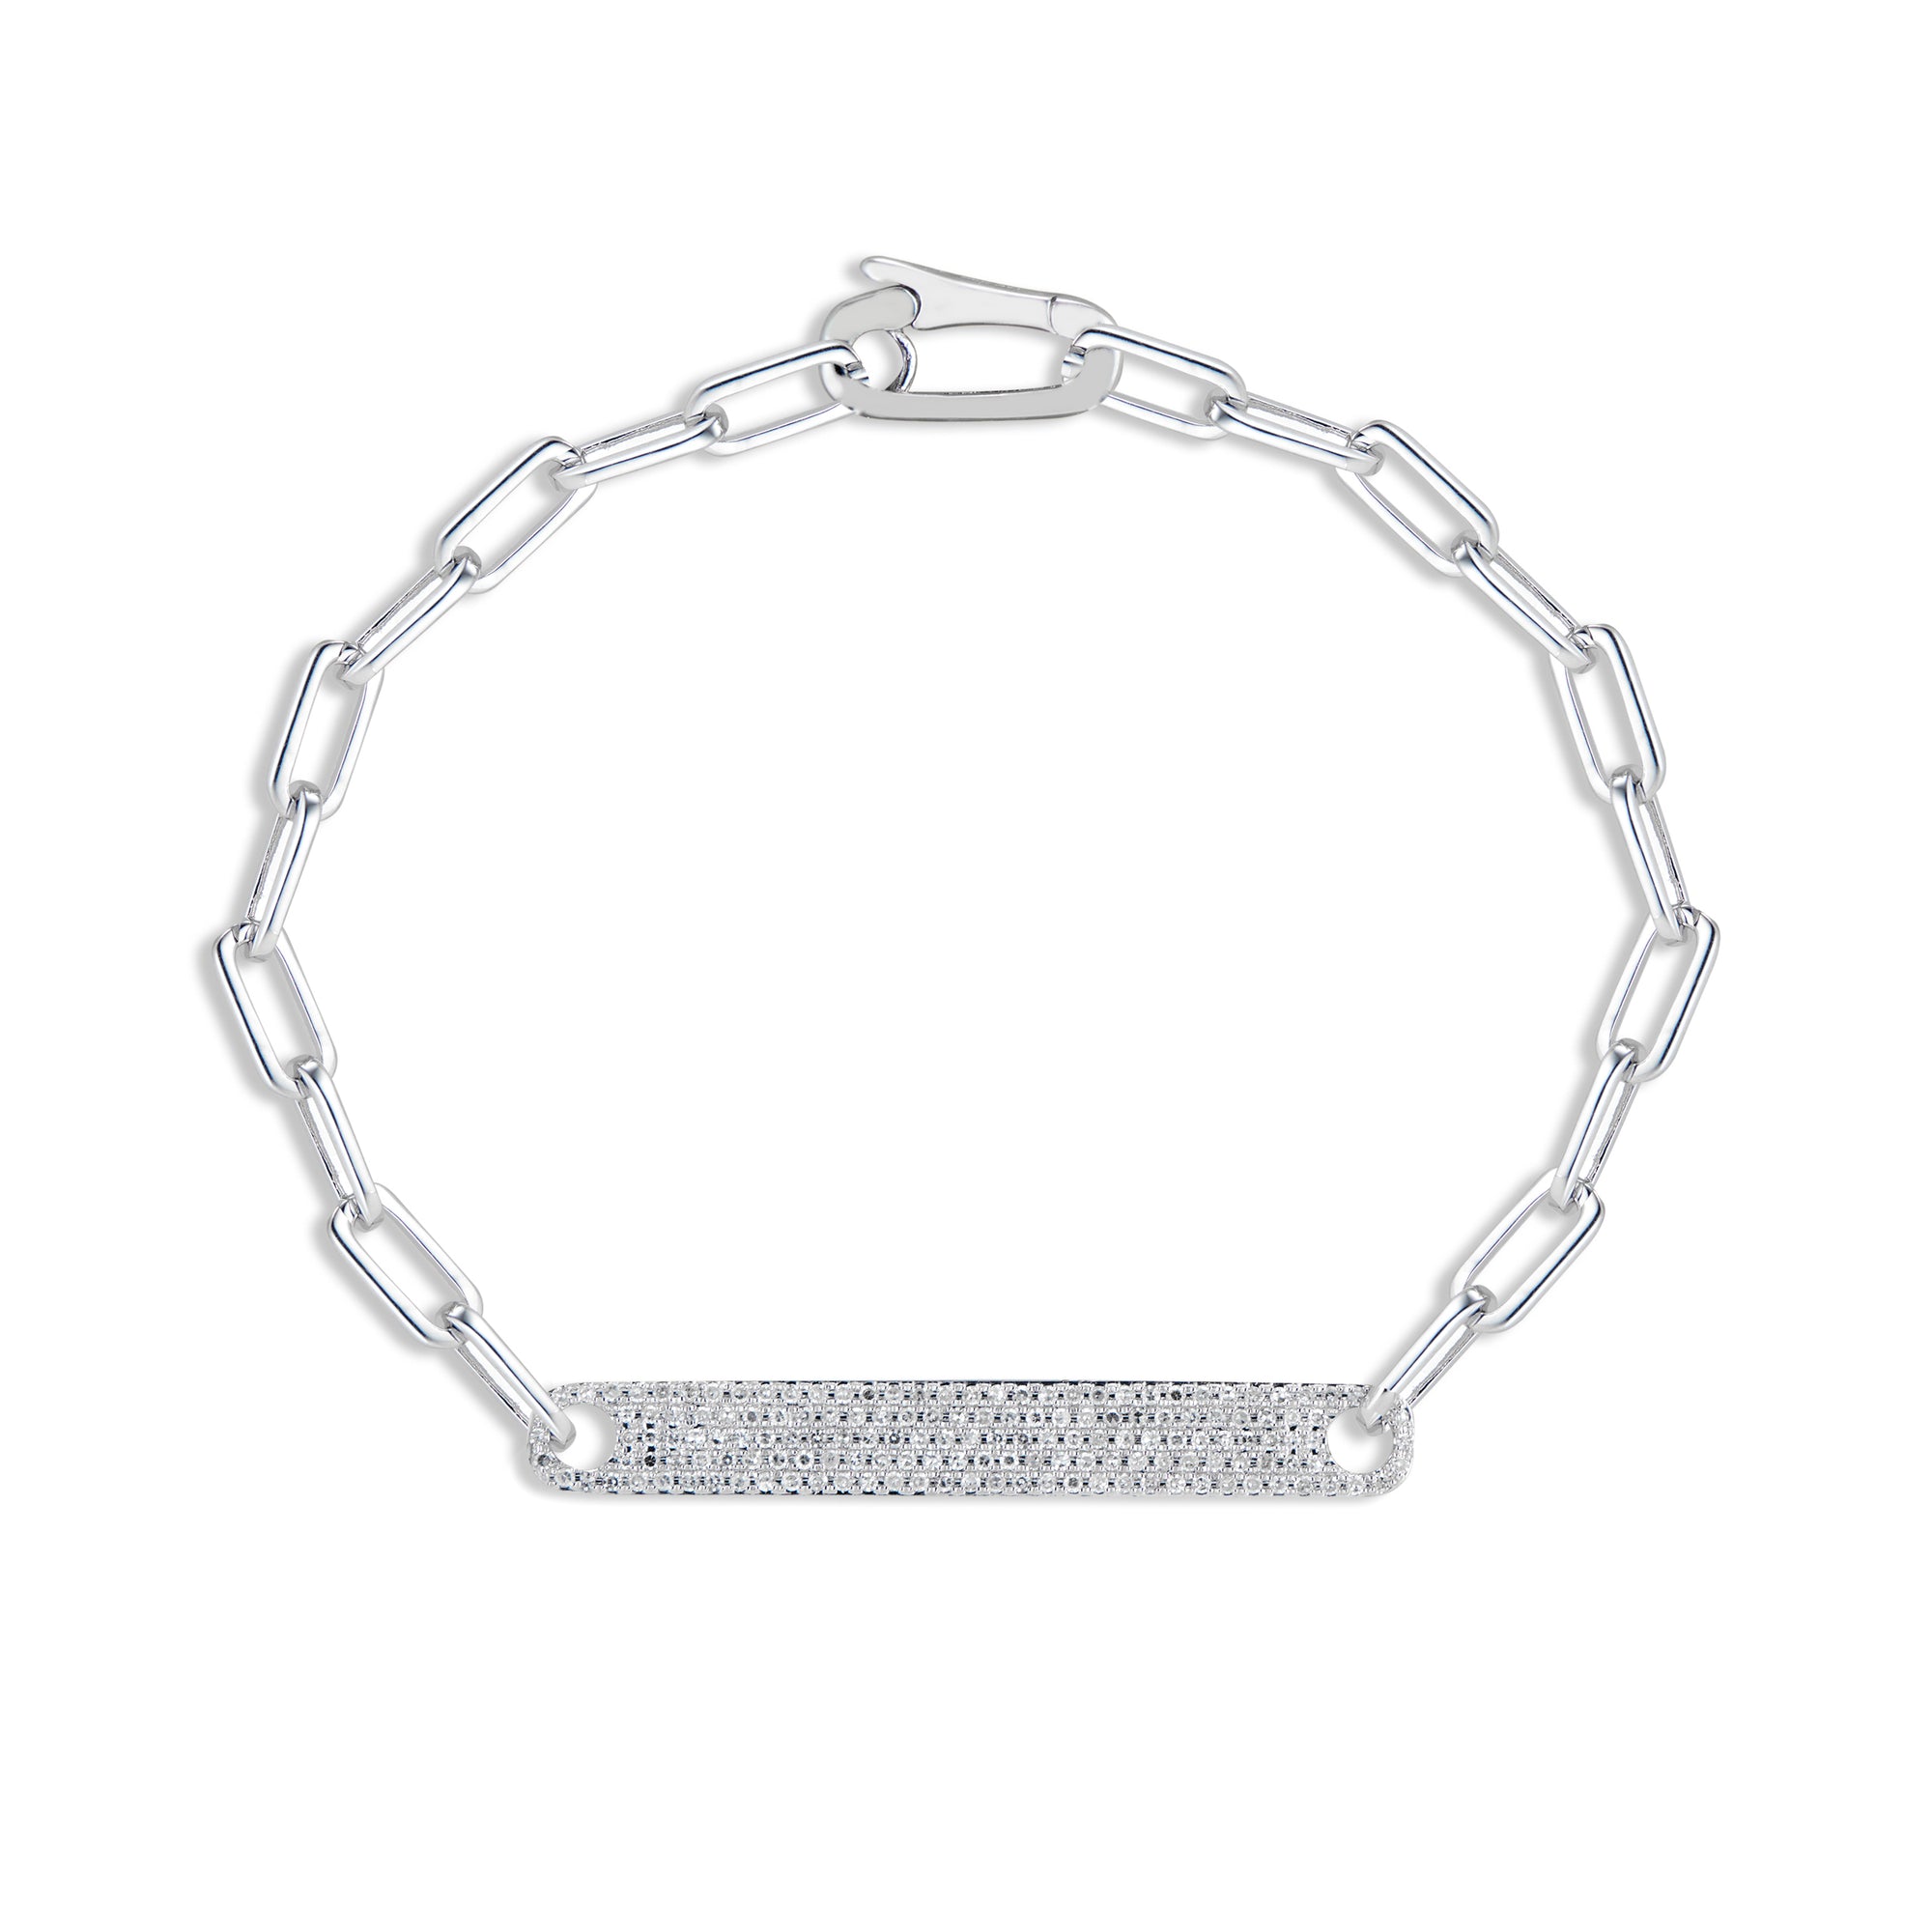 Diamond Bar Wide Link Bracelet - 14K white gold weighing 5.64 grams - 157 round diamonds totaling 0.43 carats